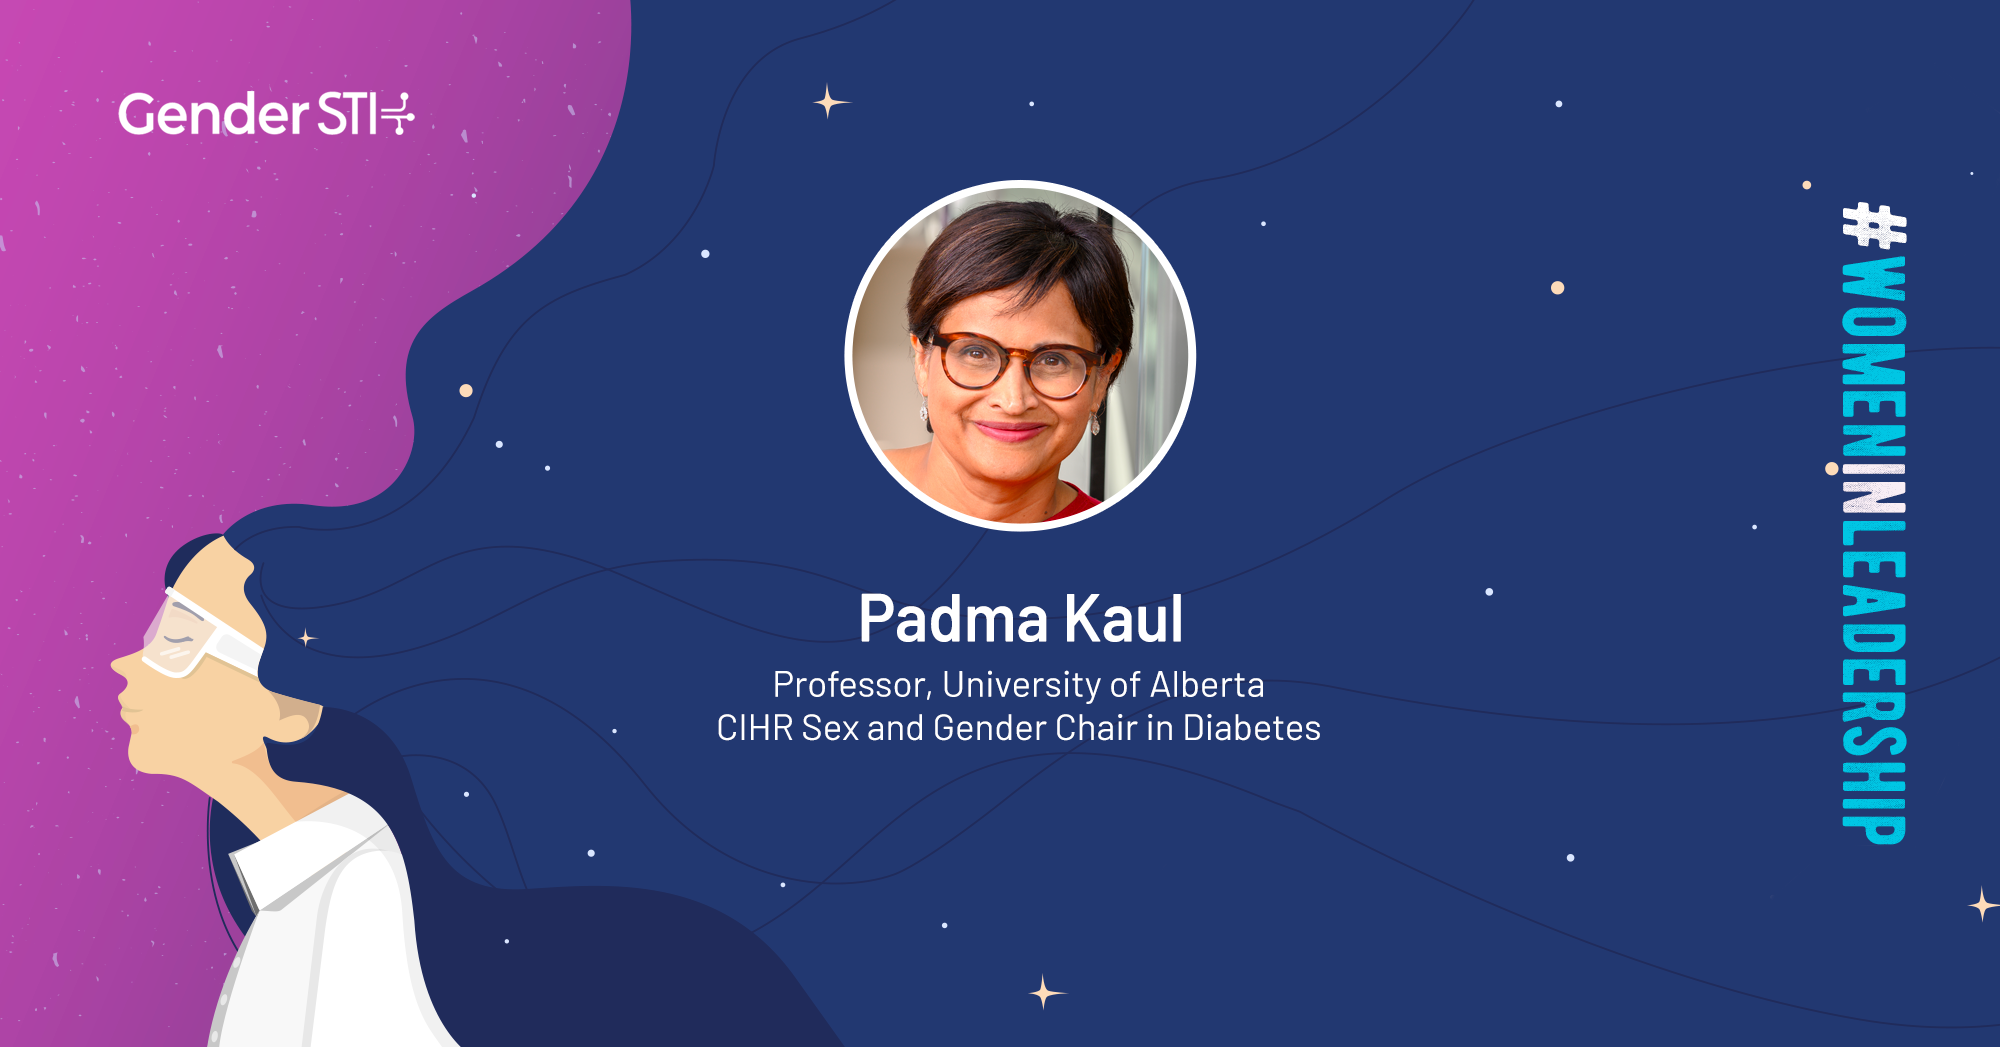 Padma Kaul, a professor at the University of Alberta, is one of Gender STI's #WomenInLeadership nominees.